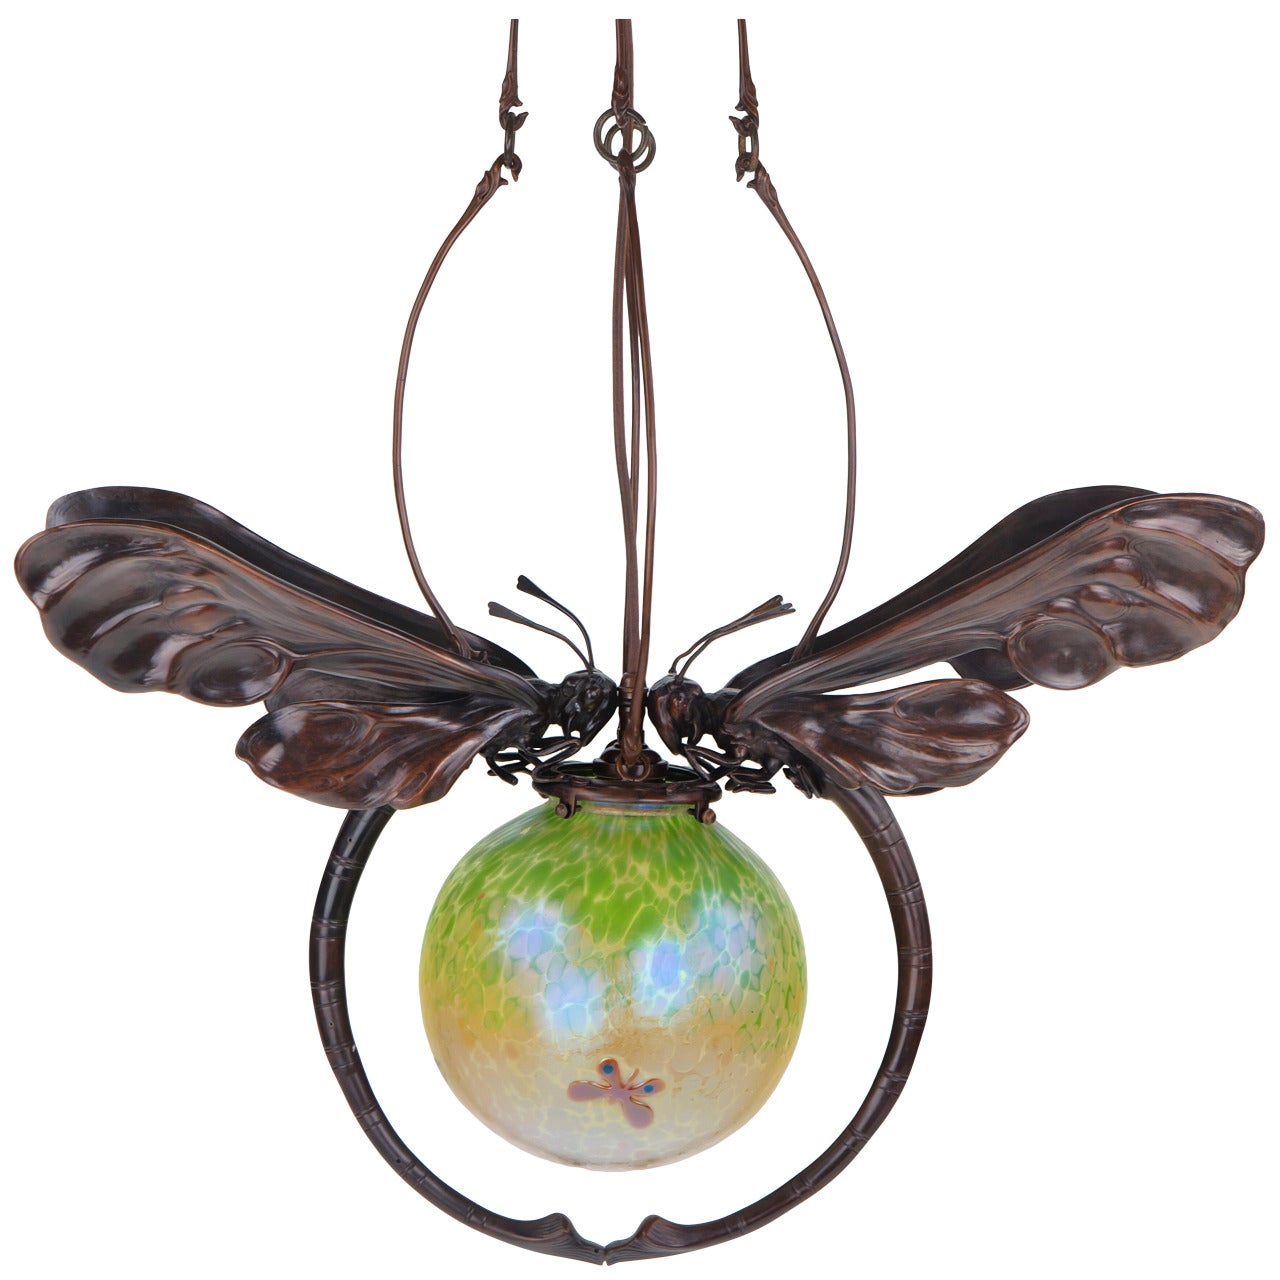 Austrian Art Nouveau "Butterfly" Pendant Chandelier